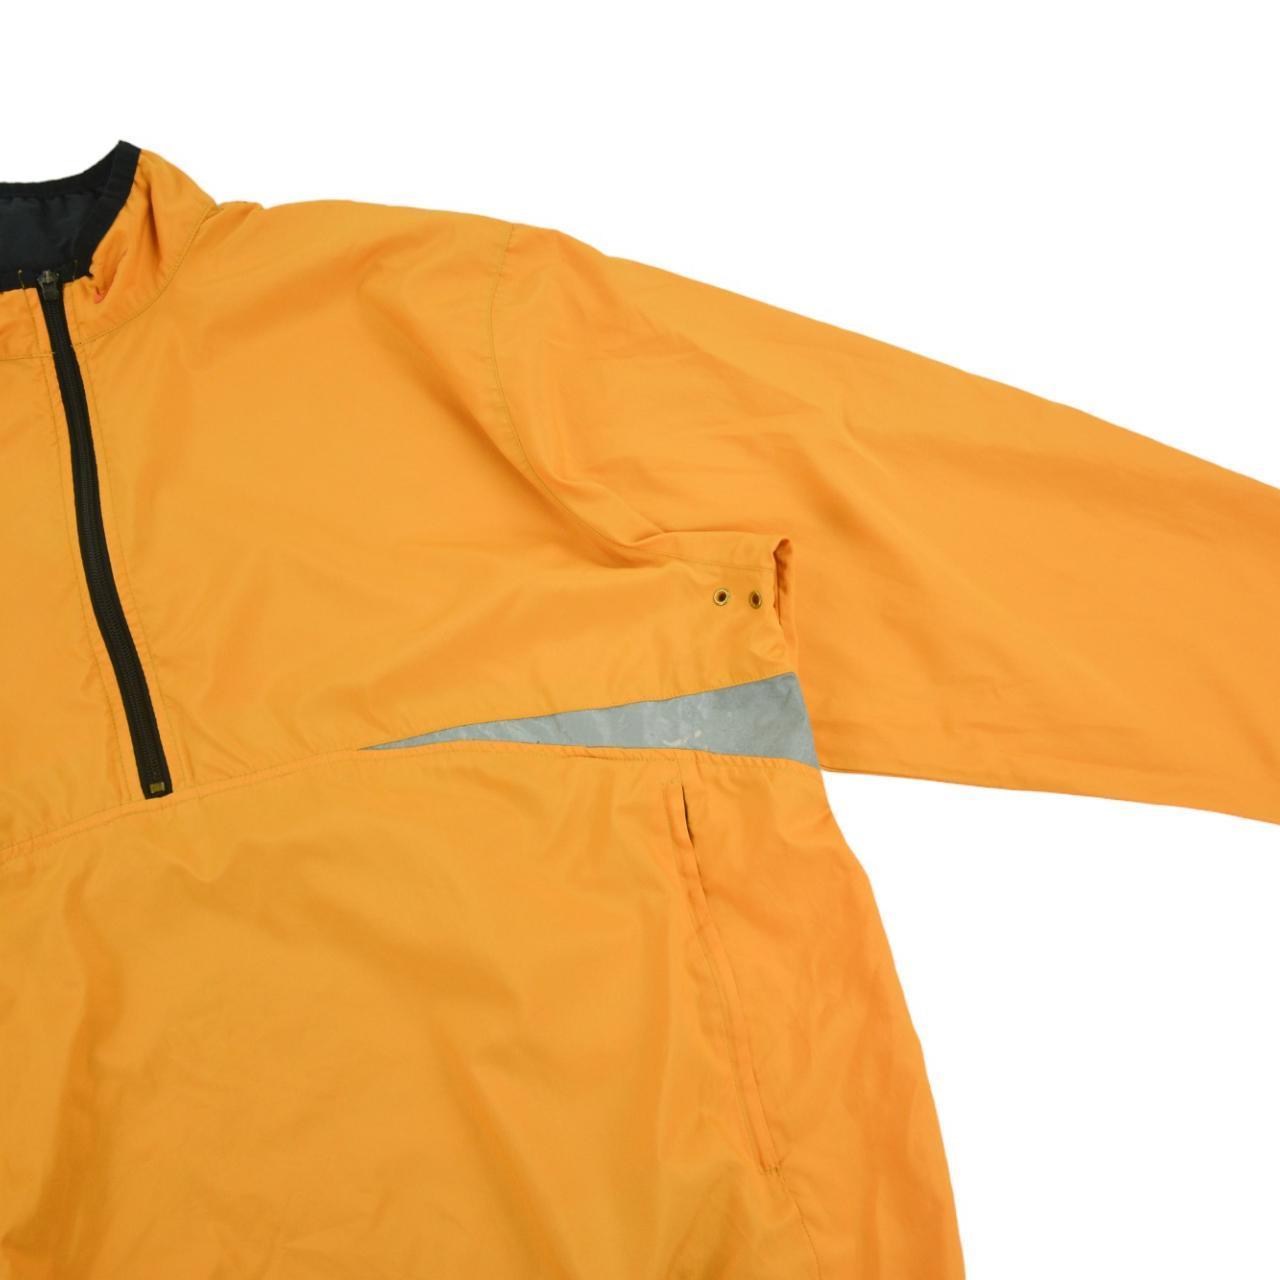 Vintage Nike Q Zip Jacket Size XL - Known Source